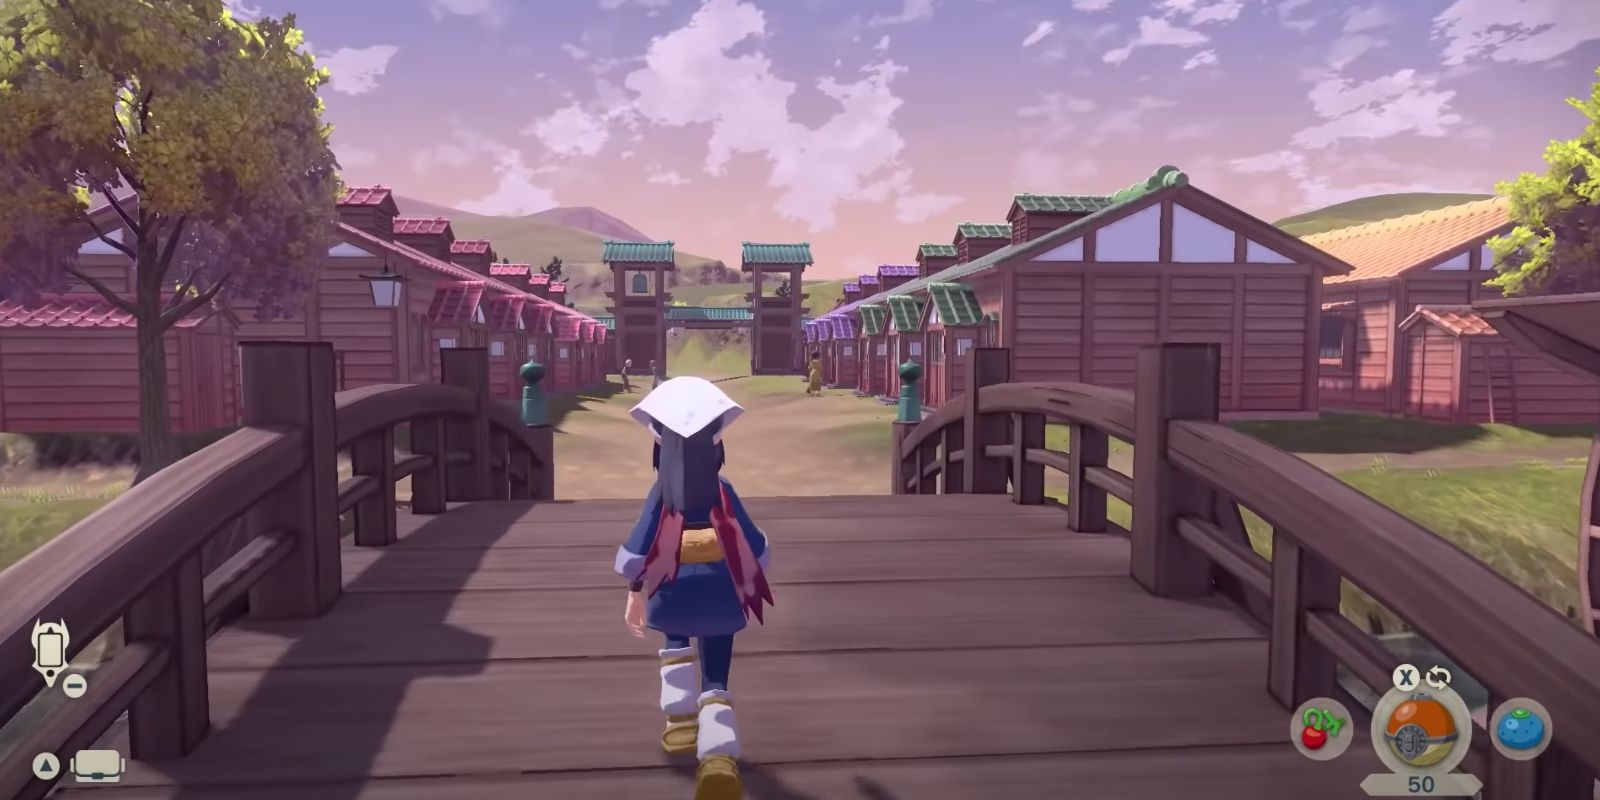 A Pokémon Trainer walking over a bridge in Jubilife Village from Pokémon Legends: Arceus